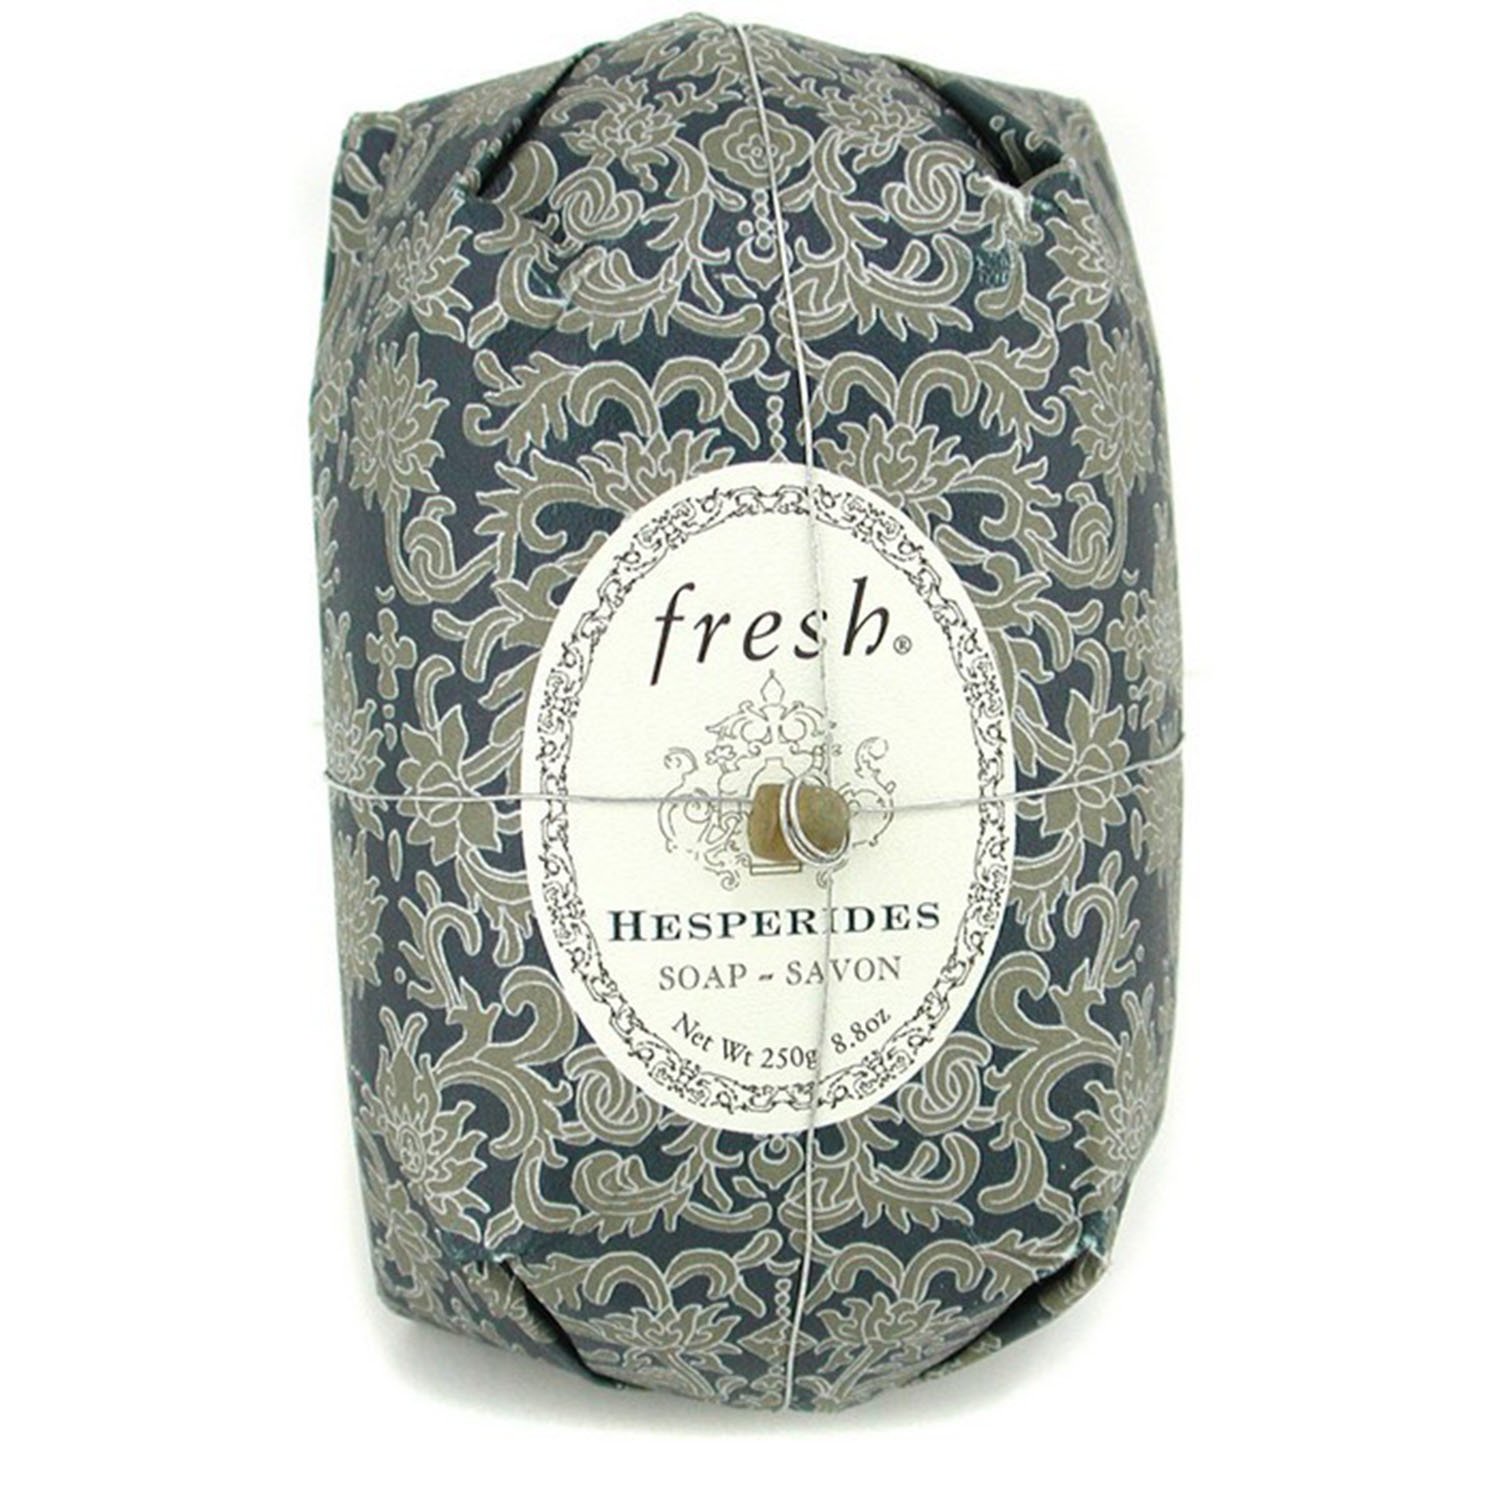 馥蕾詩 Fresh - 原創香皂 Original Soap - Hesperides